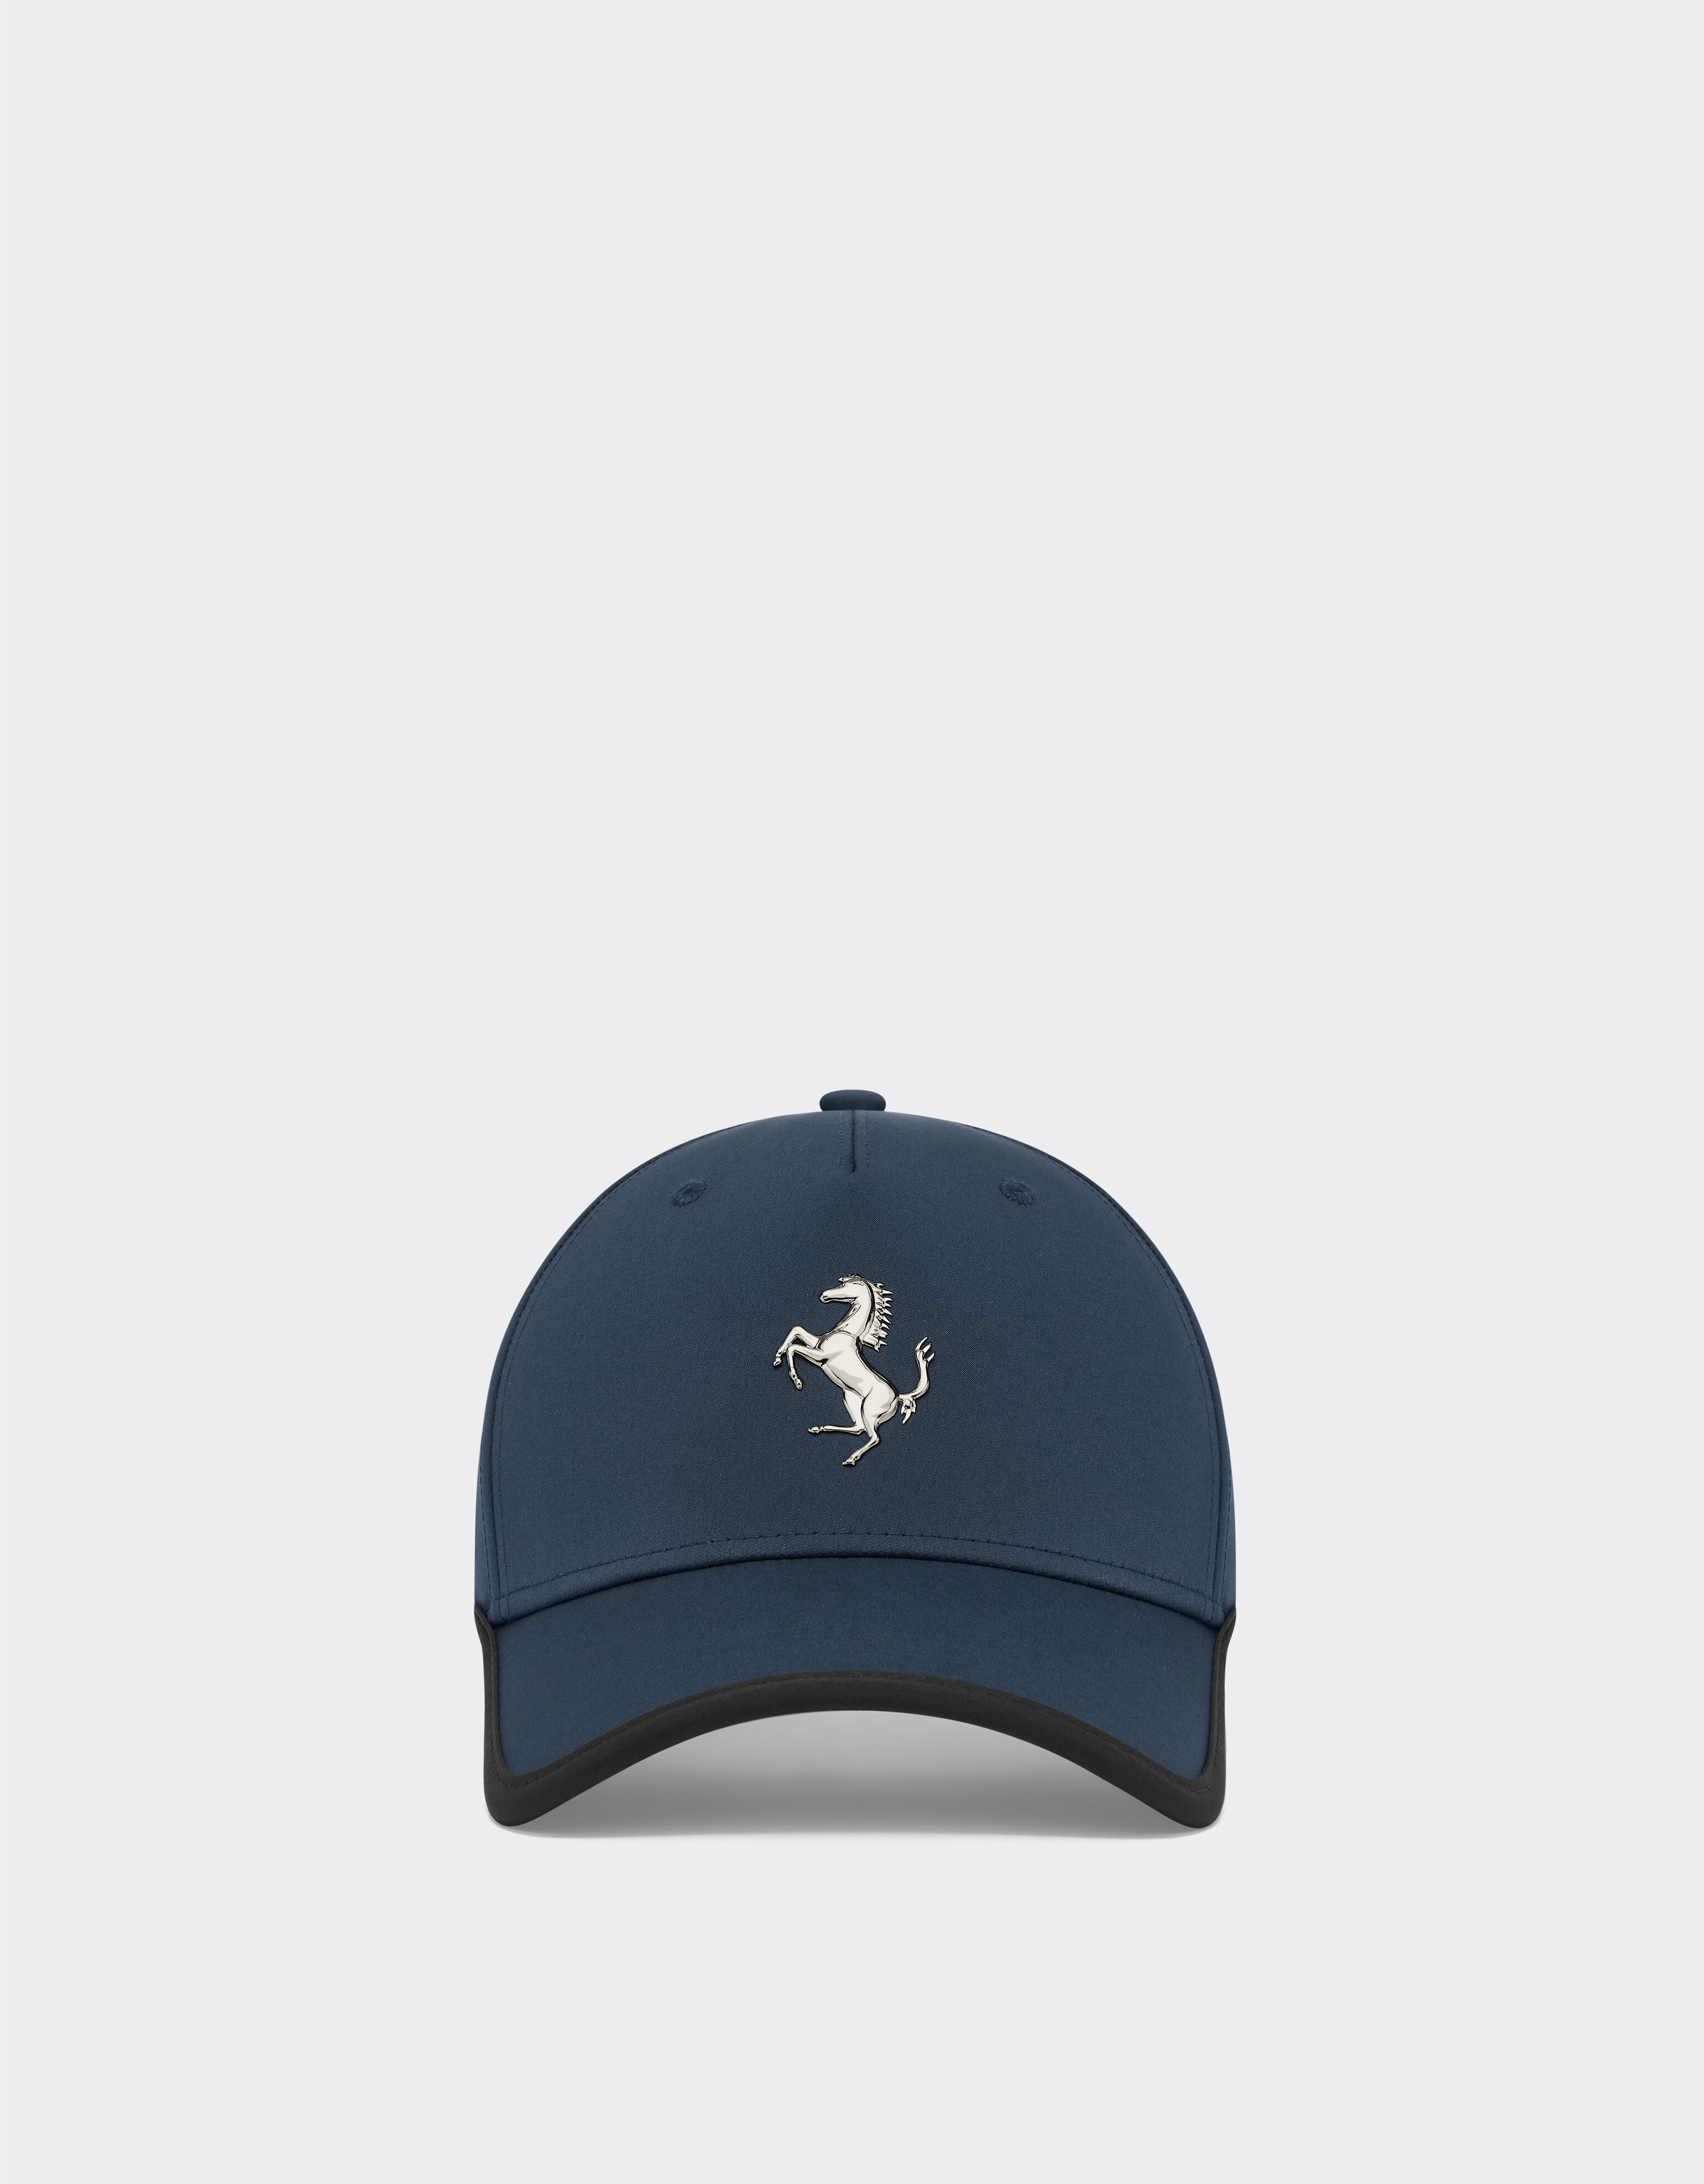 Ferrari Baseball hat with contrast band Ingrid 21263f